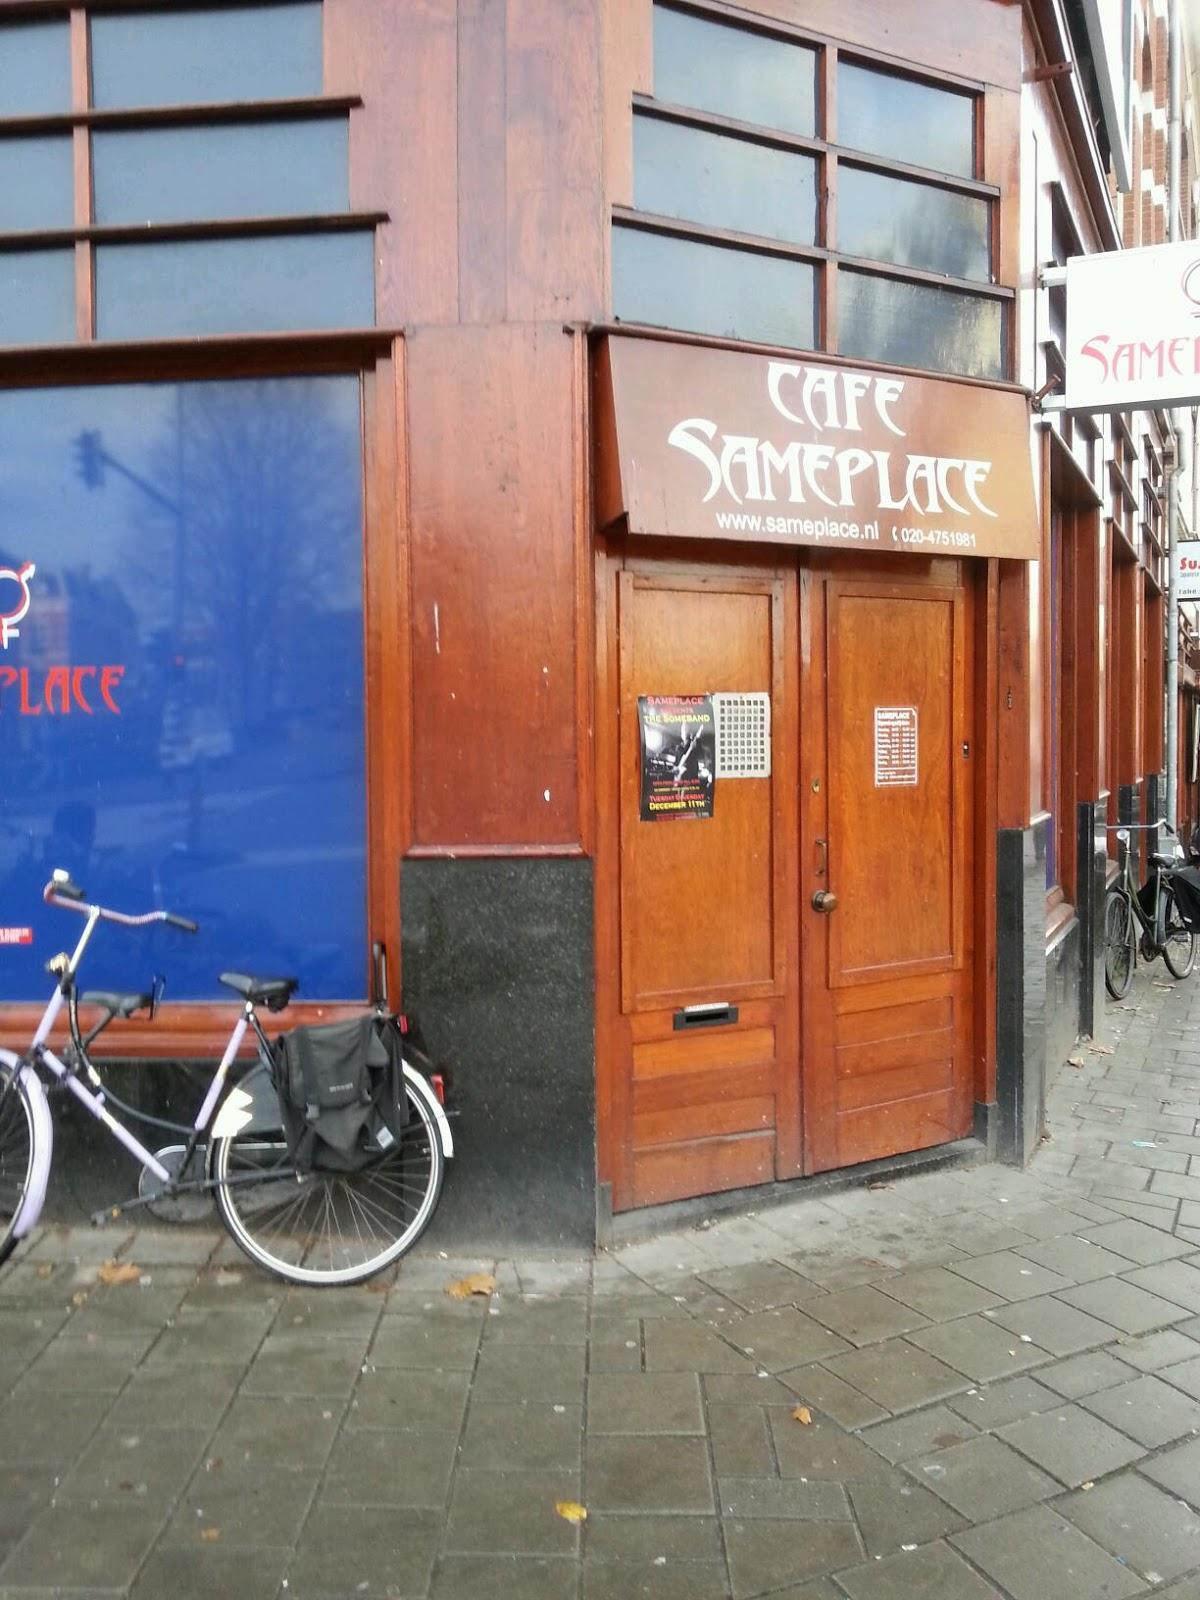 Sameplace amsterdam reviews